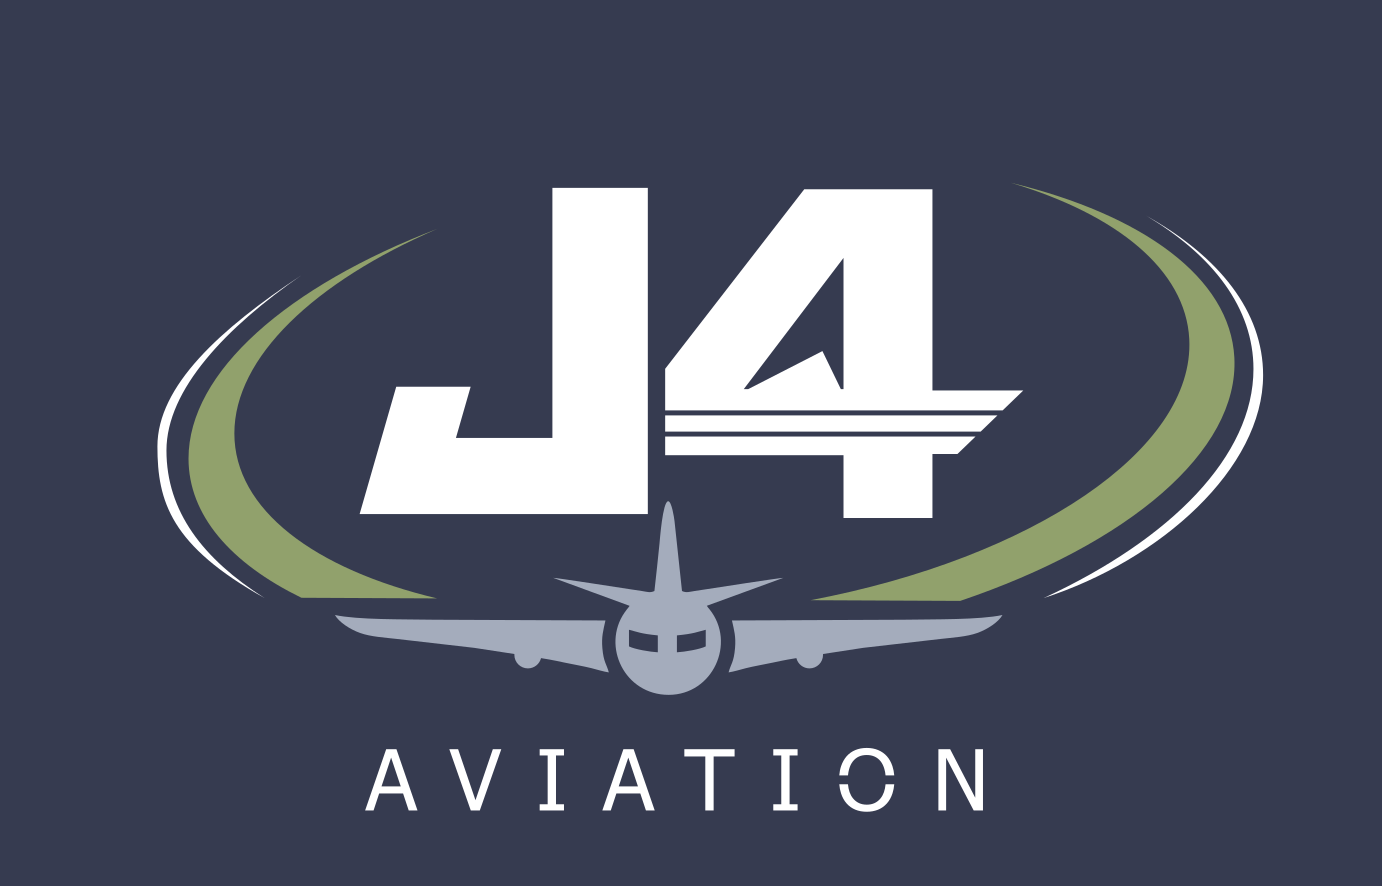 J4 Aviation